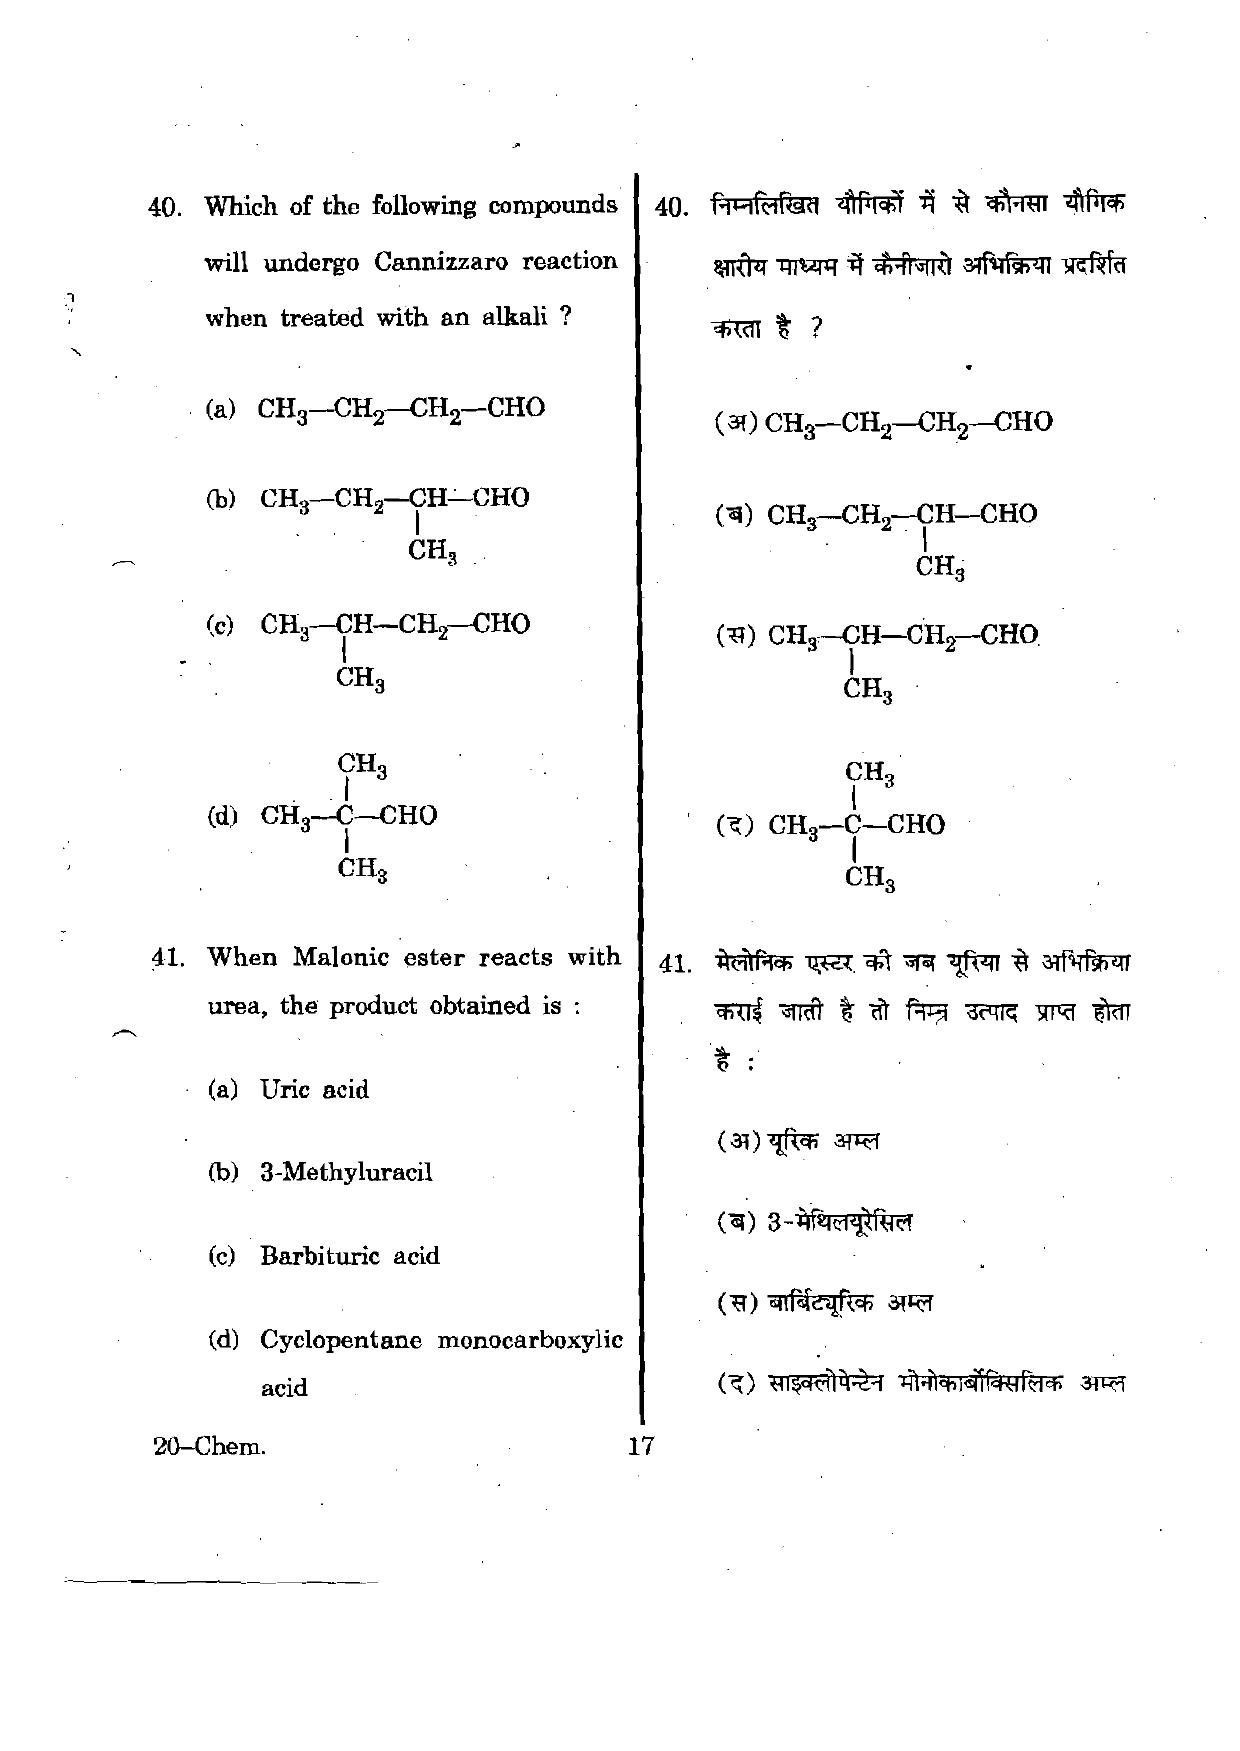 URATPG Chemistry 2012 Question Paper - Page 17